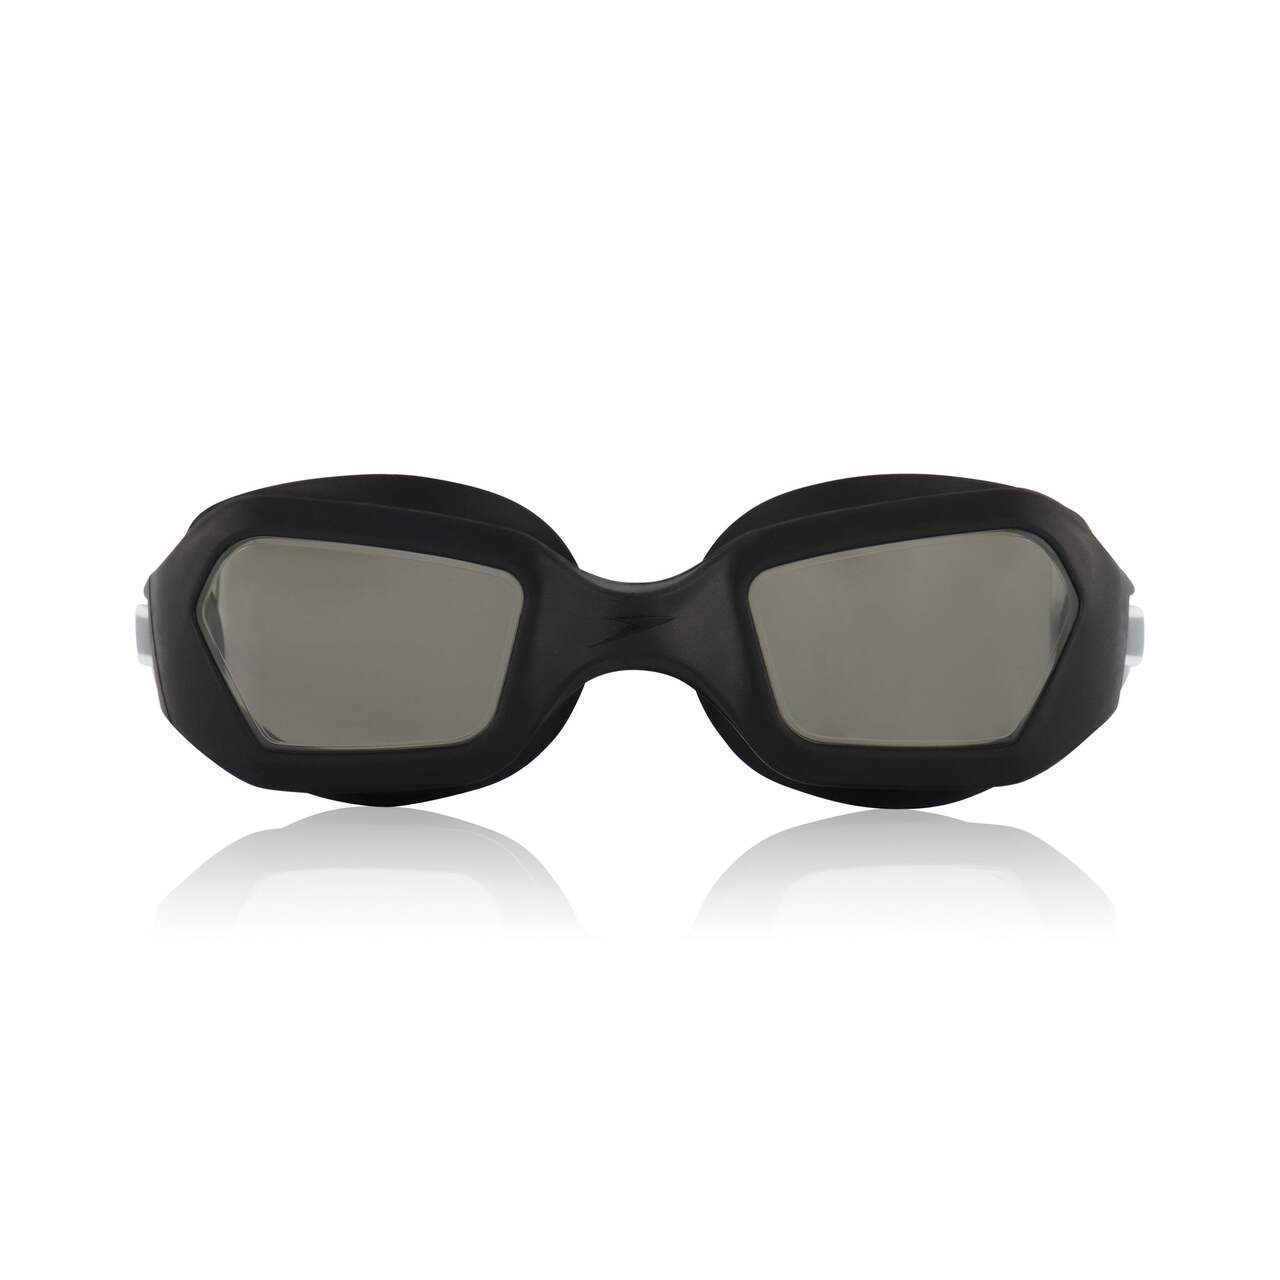 Speedo Adult Sunglasses - Polarized Lens & Floating Frame; Adult